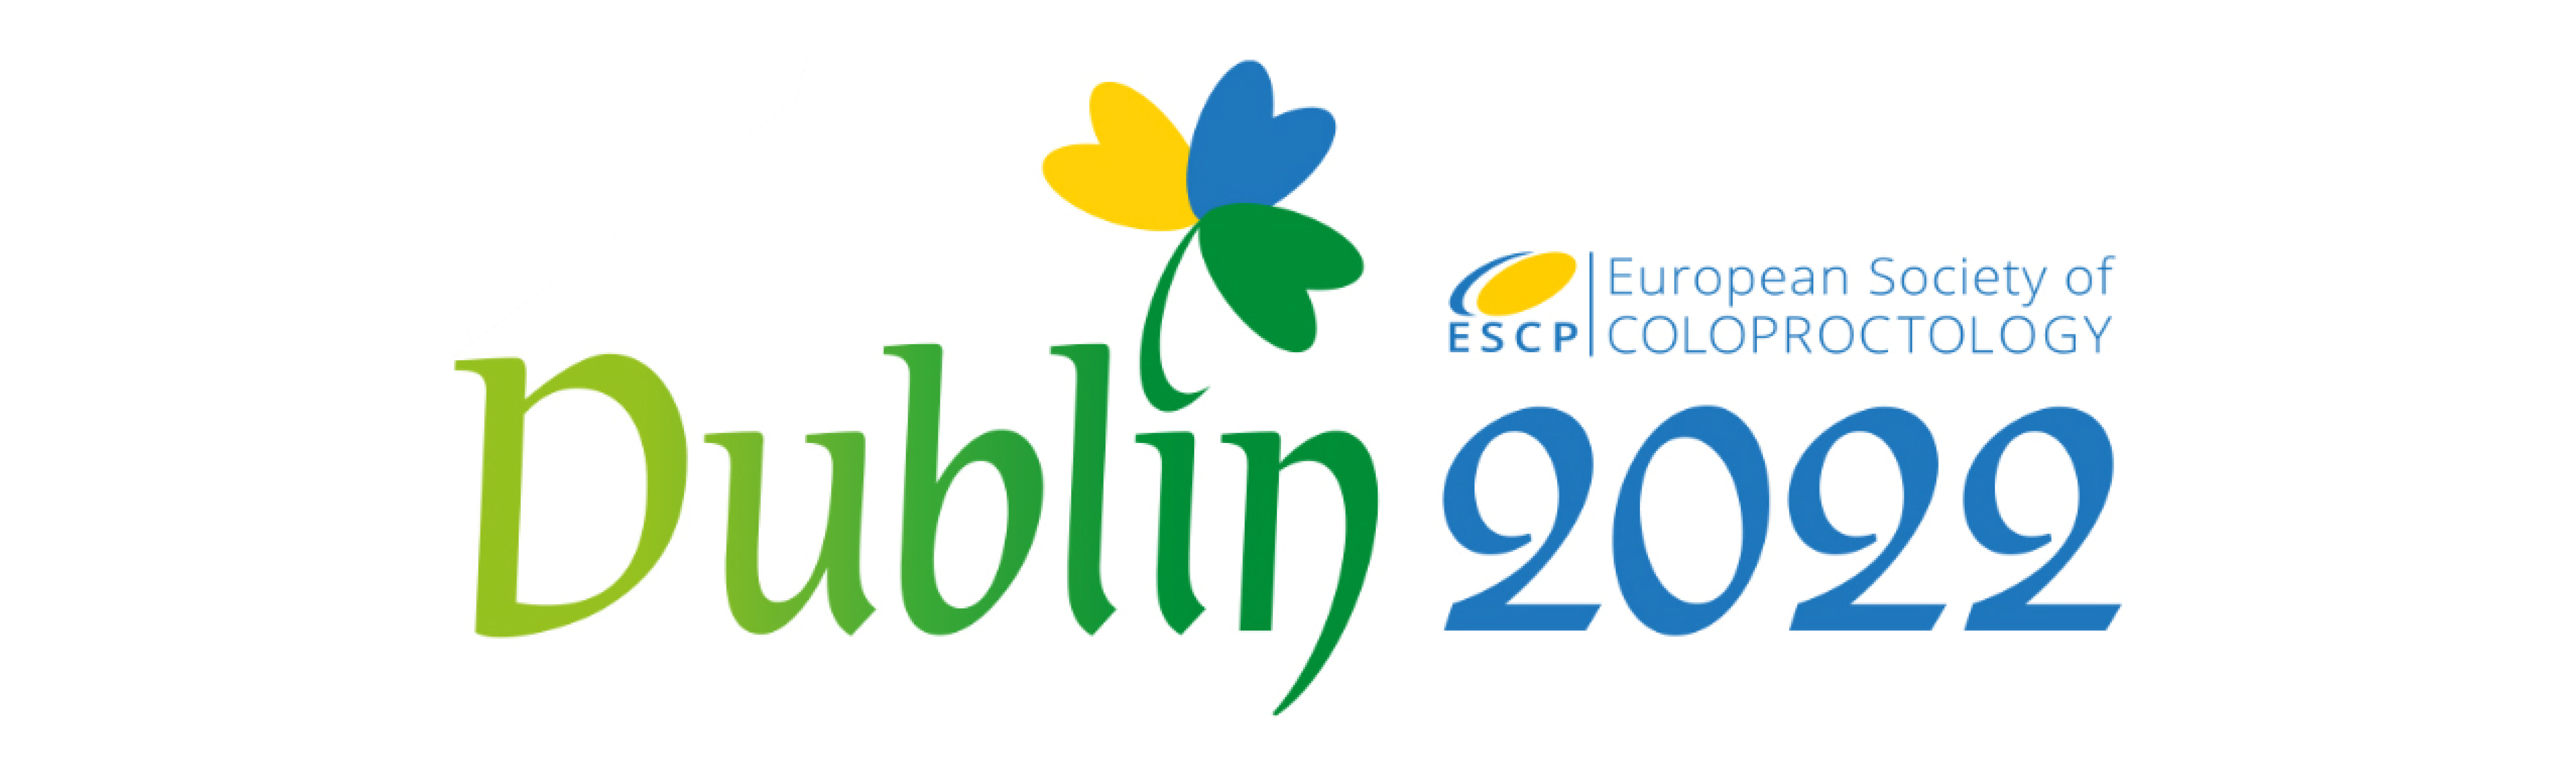 ESCP Meeting, 21-23 September 2022